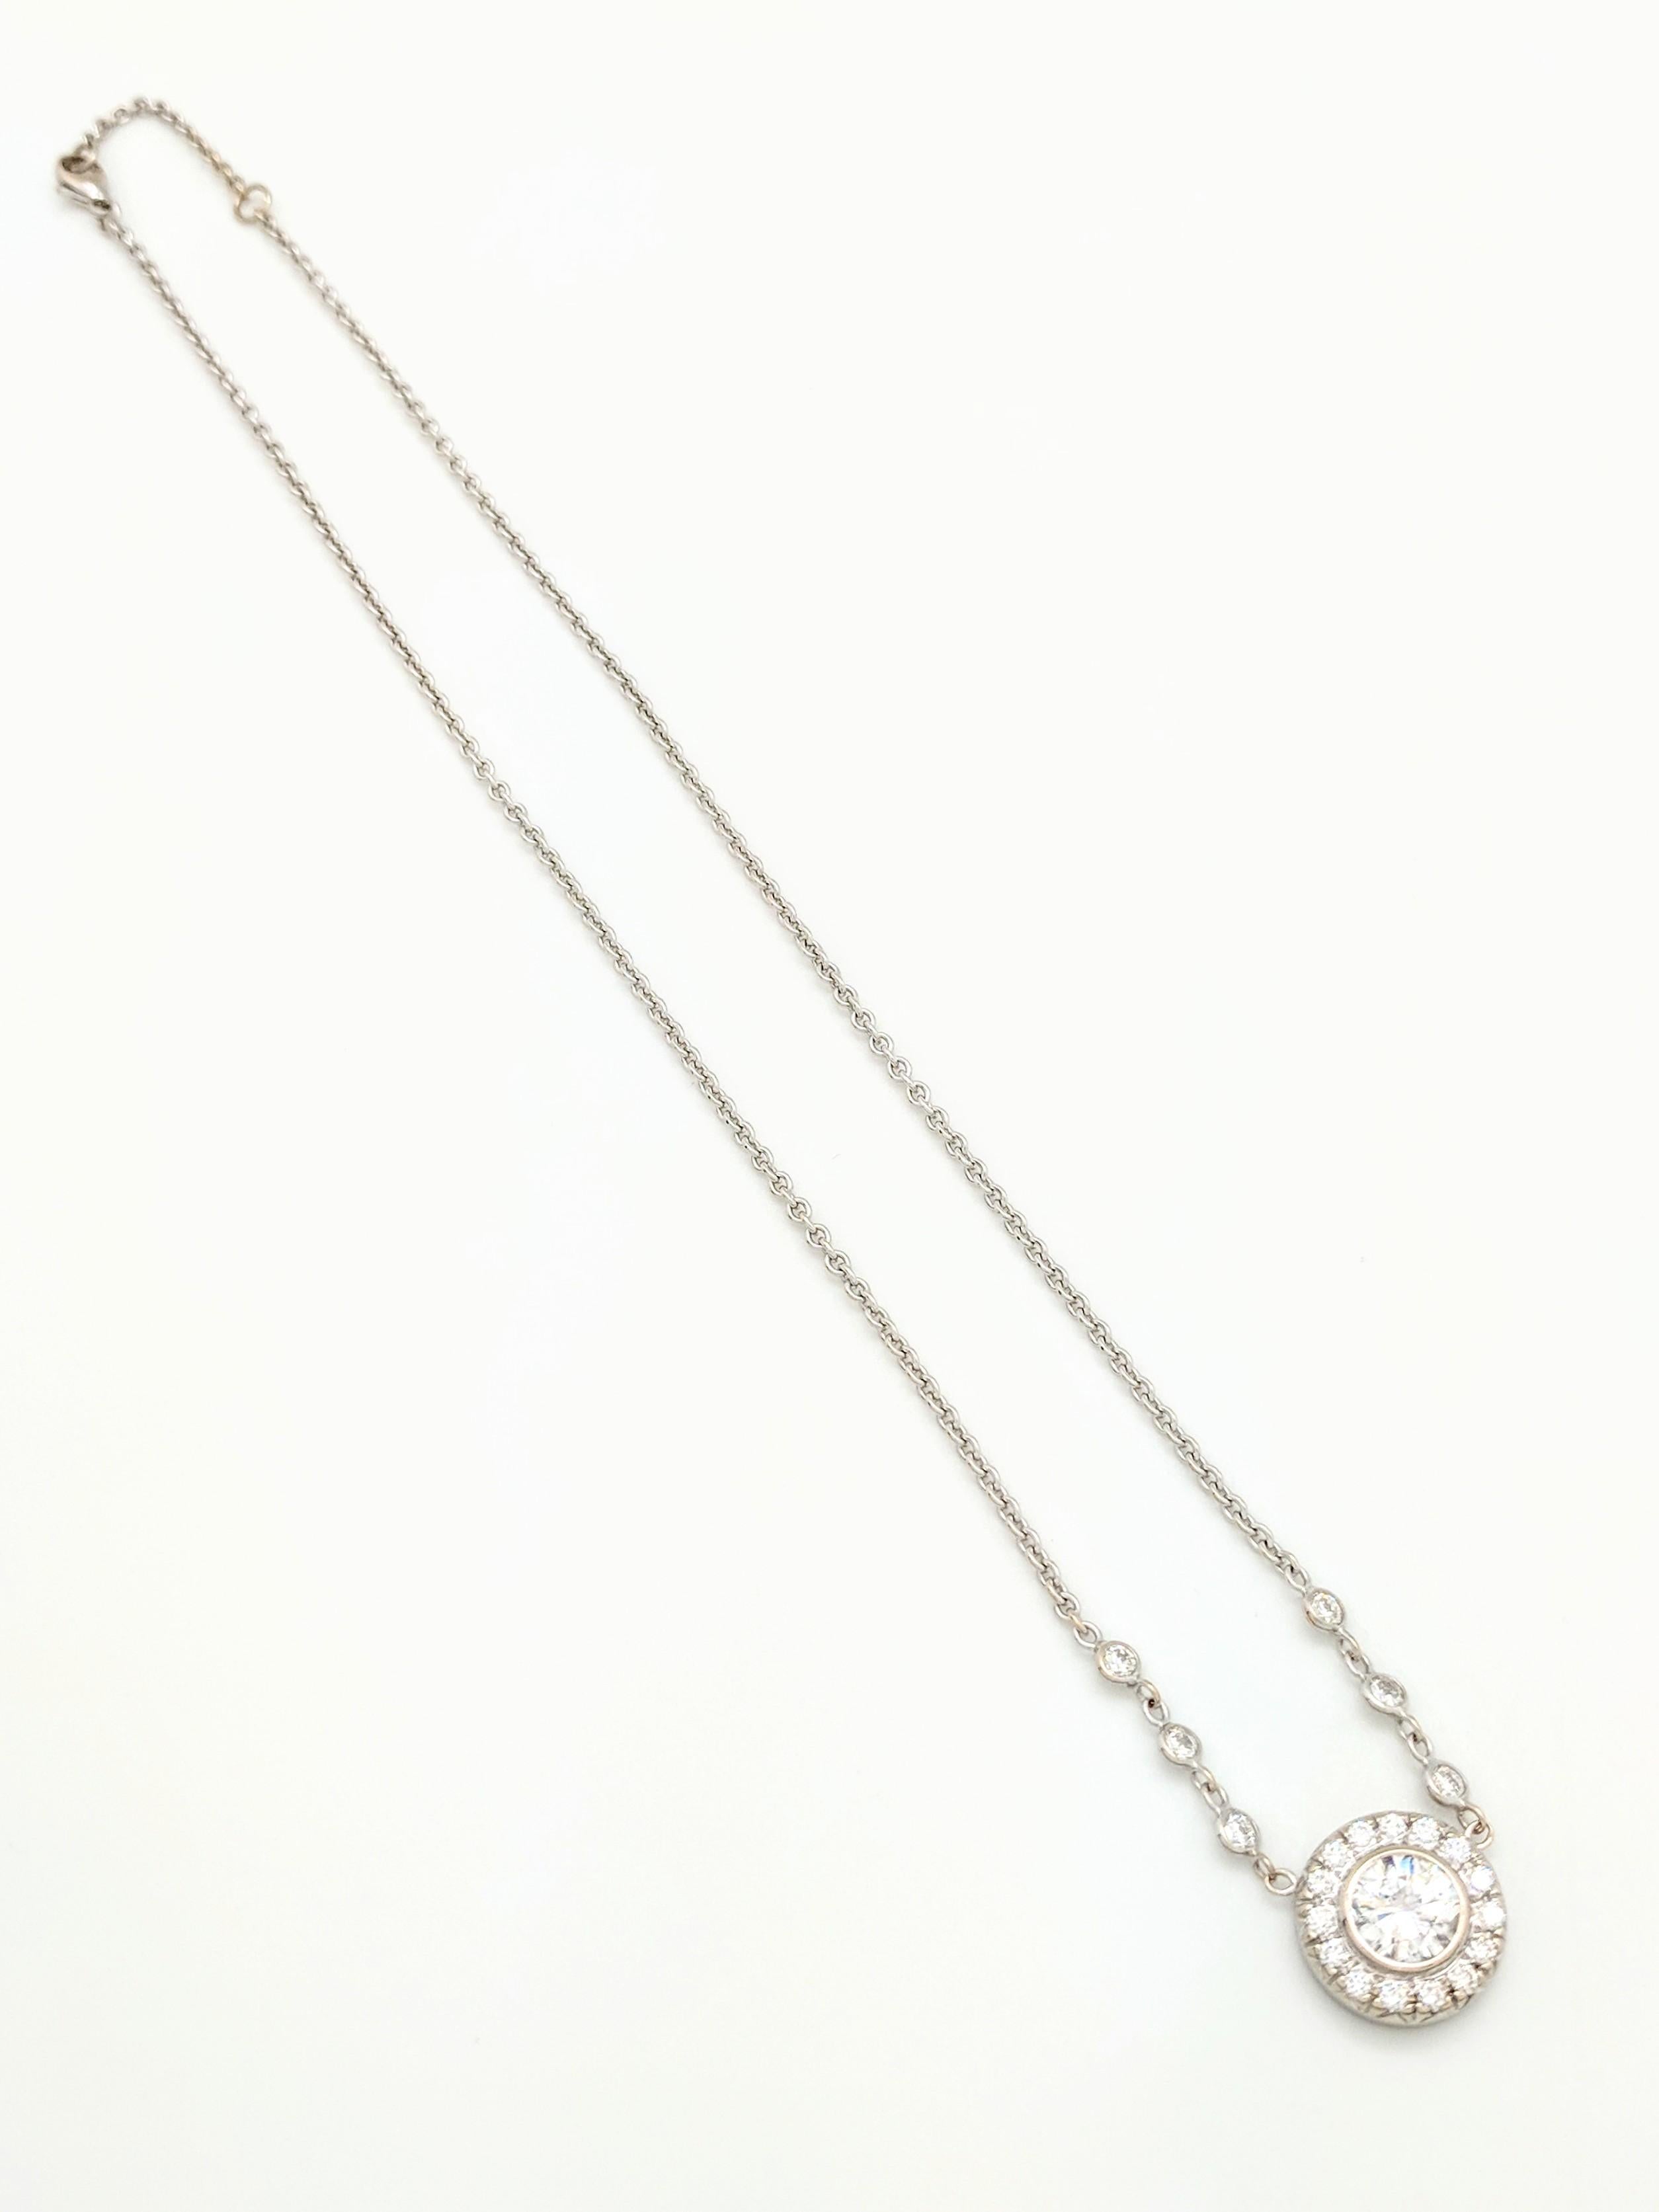 Women's or Men's 1.10 Carat Round Diamond Bezel Set in 18 Karat White Gold Halo Pendant Necklace